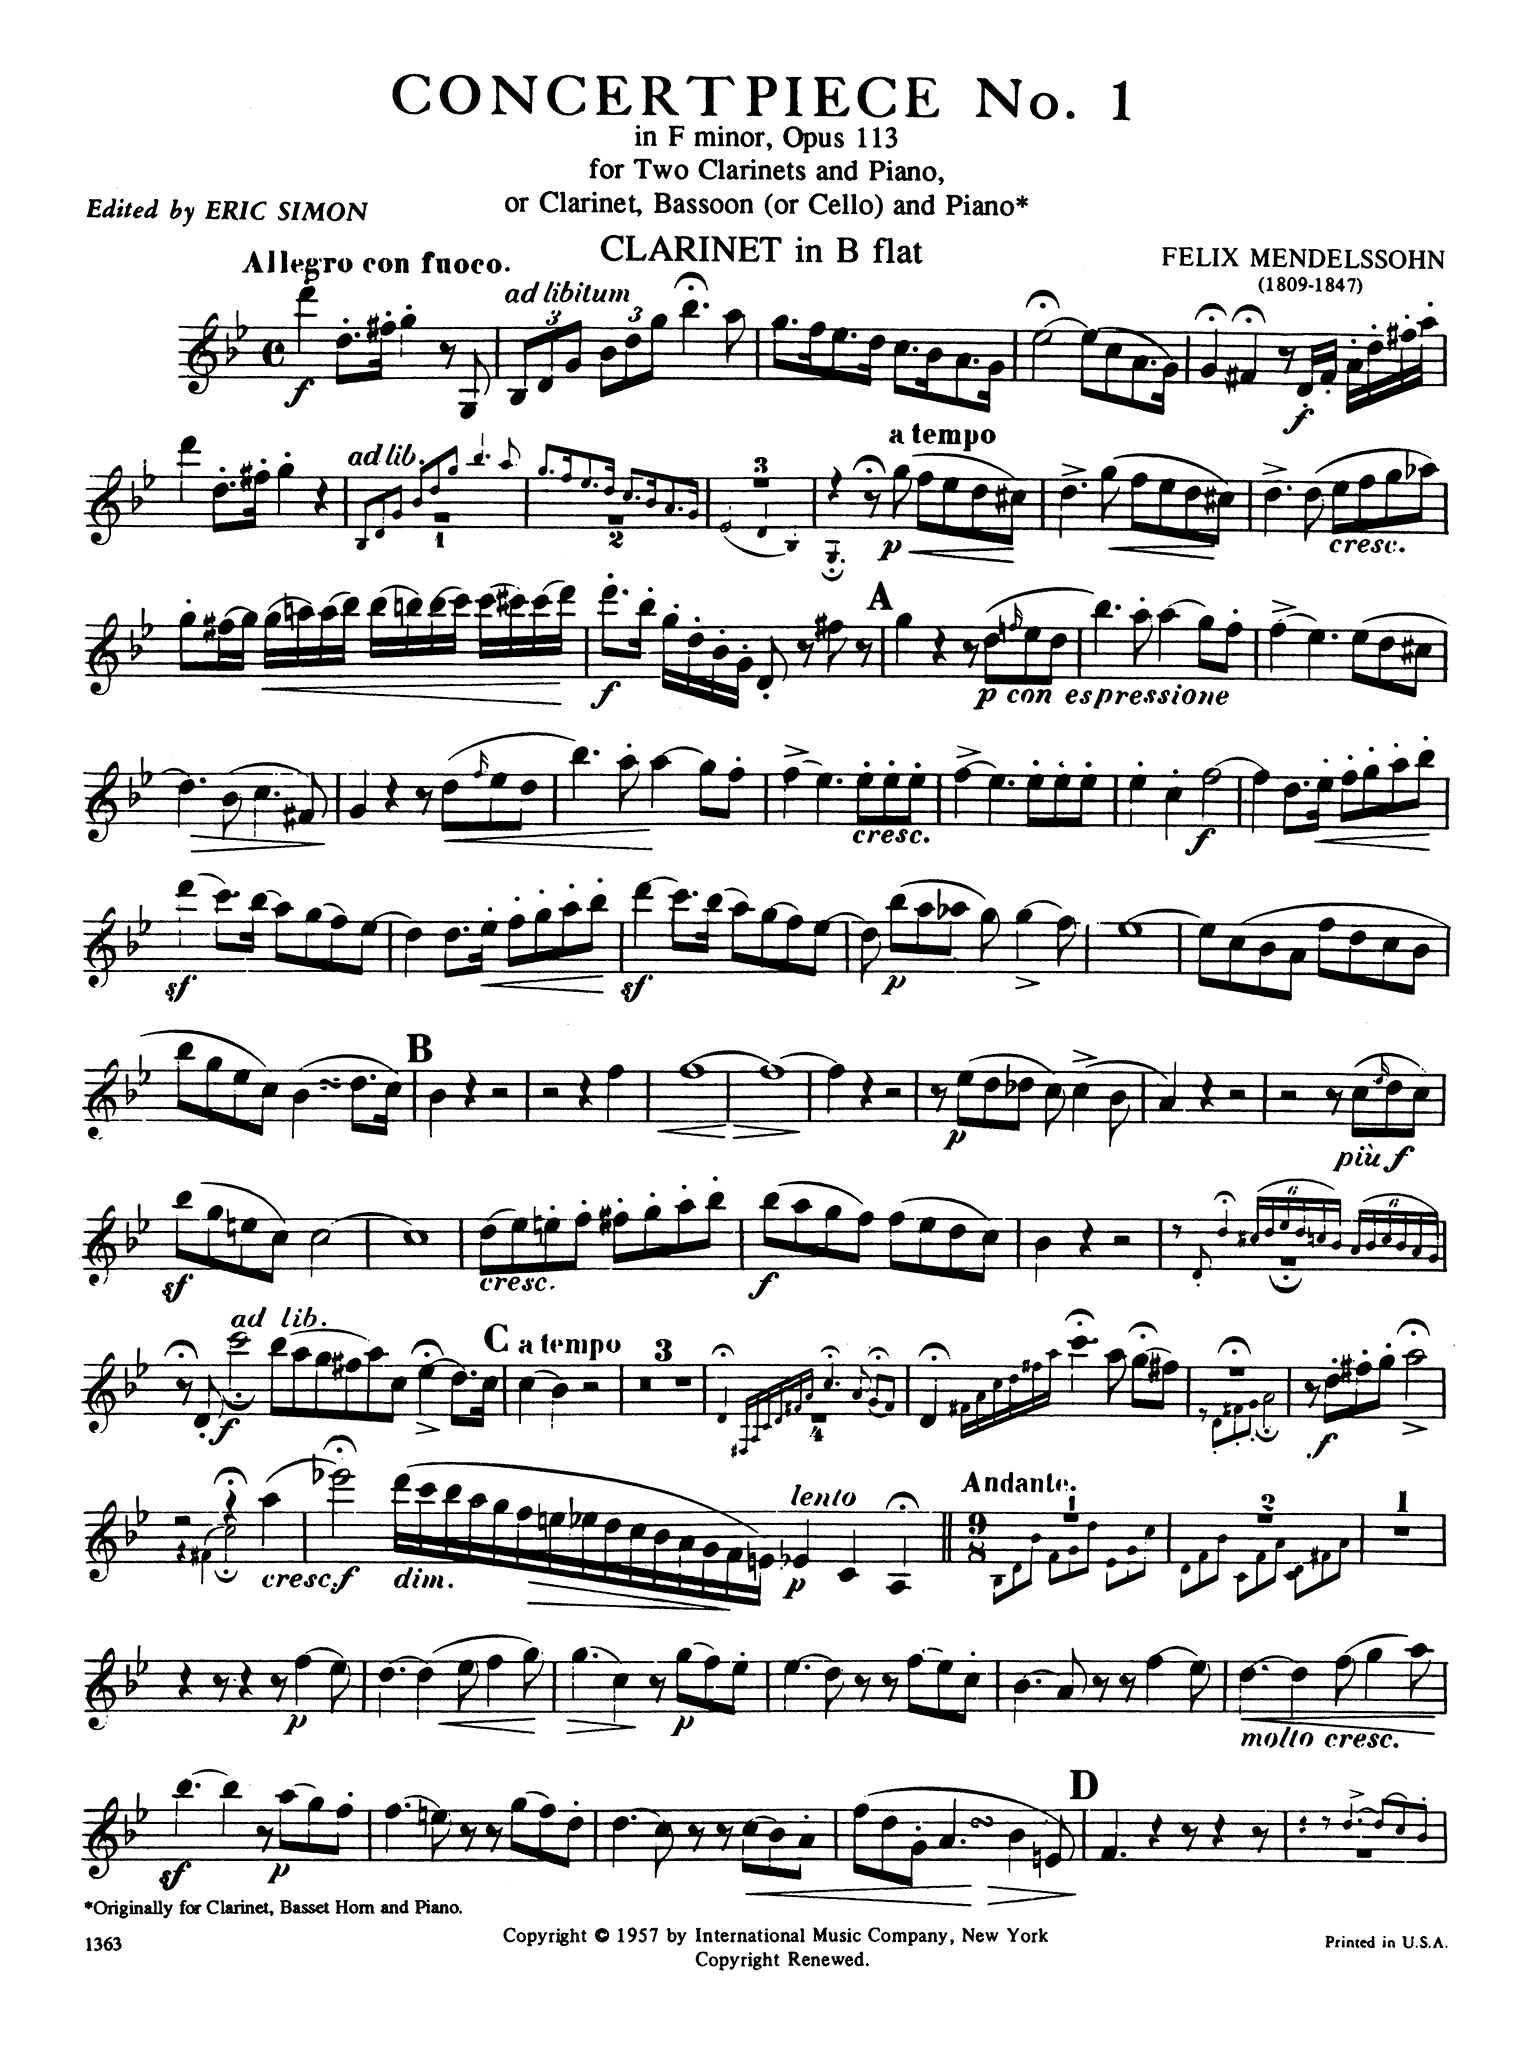 Concertpiece No. 1 in F Minor, Op. 113 First Clarinet part